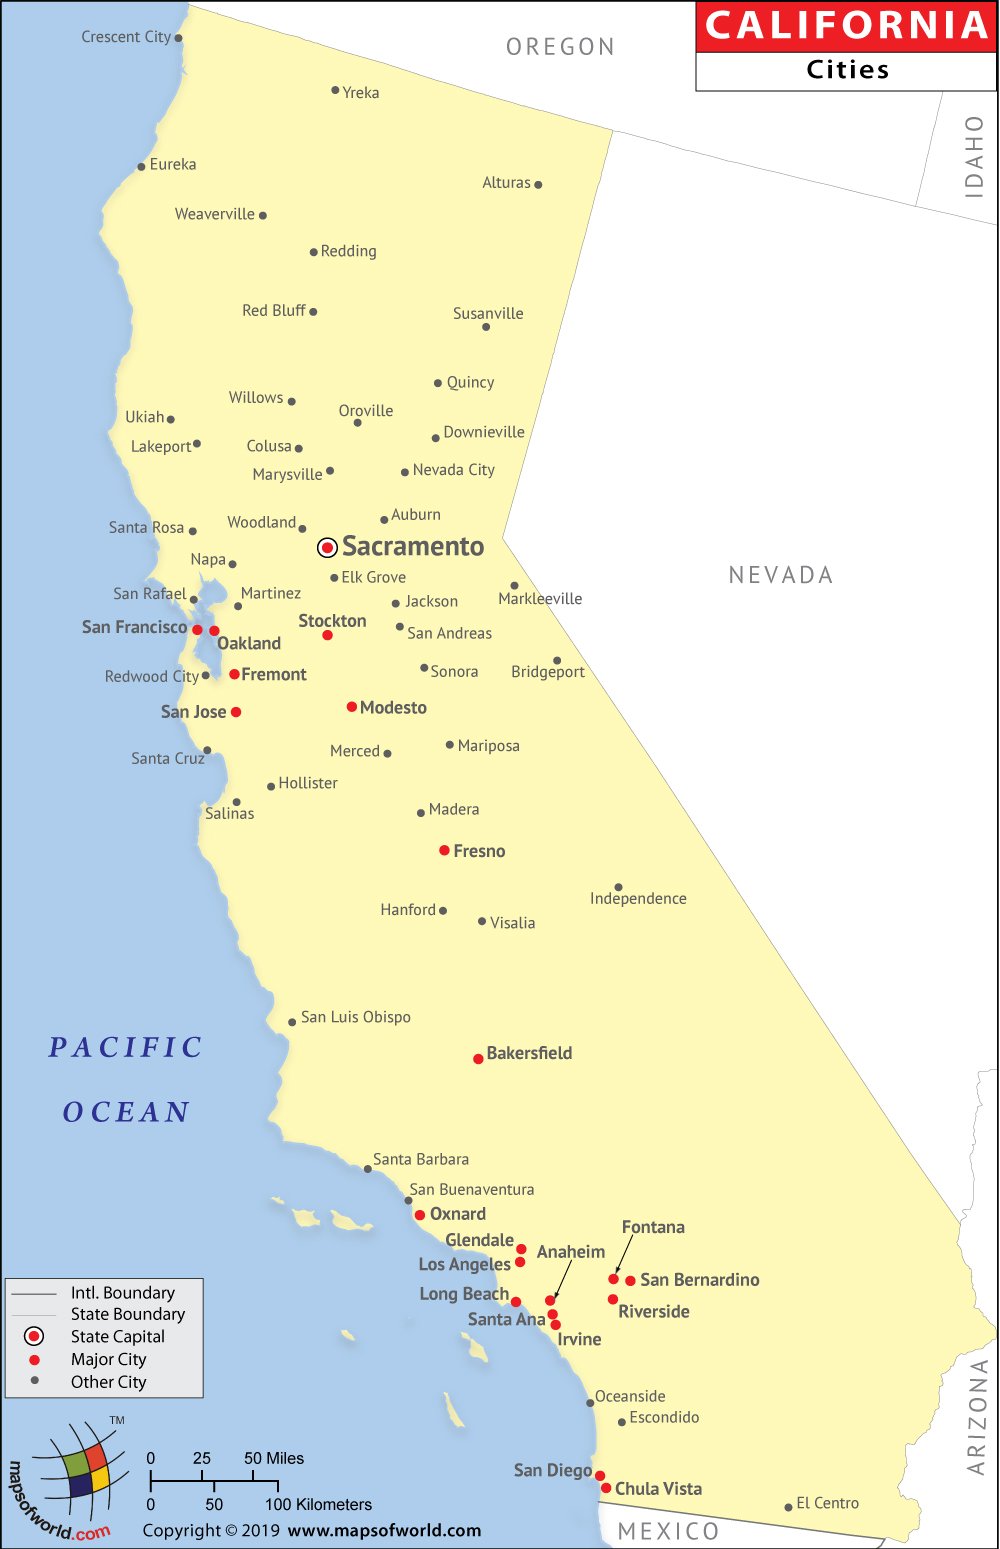 cities in california, california cities map